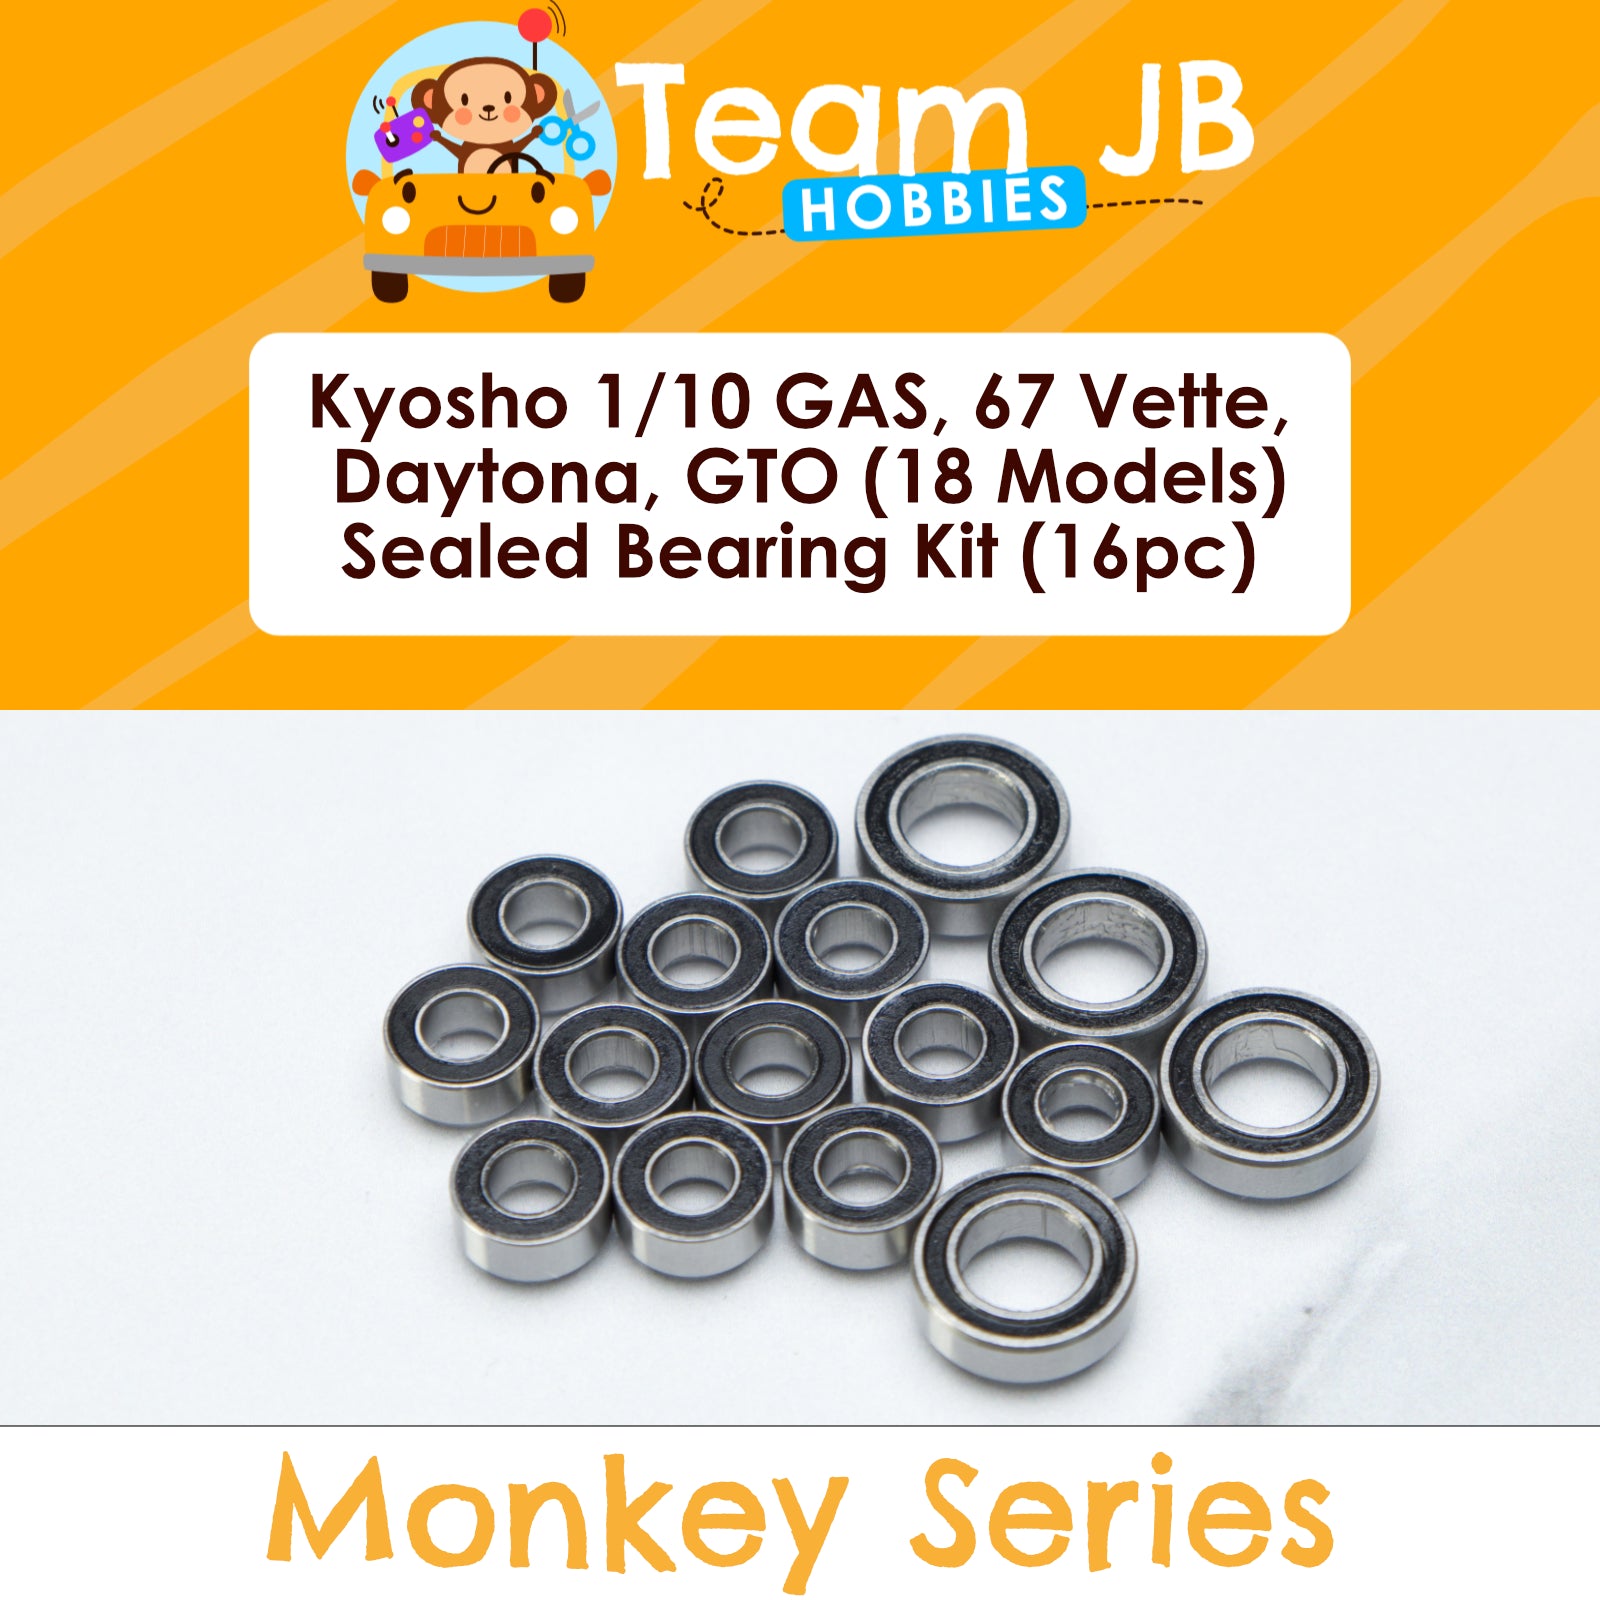 Kyosho 1/10 GAS, 67 Vette, Cobra Daytona, Ferrari 250 GTO, Ferrari 330 P4 GTO - Sealed Bearing Kit